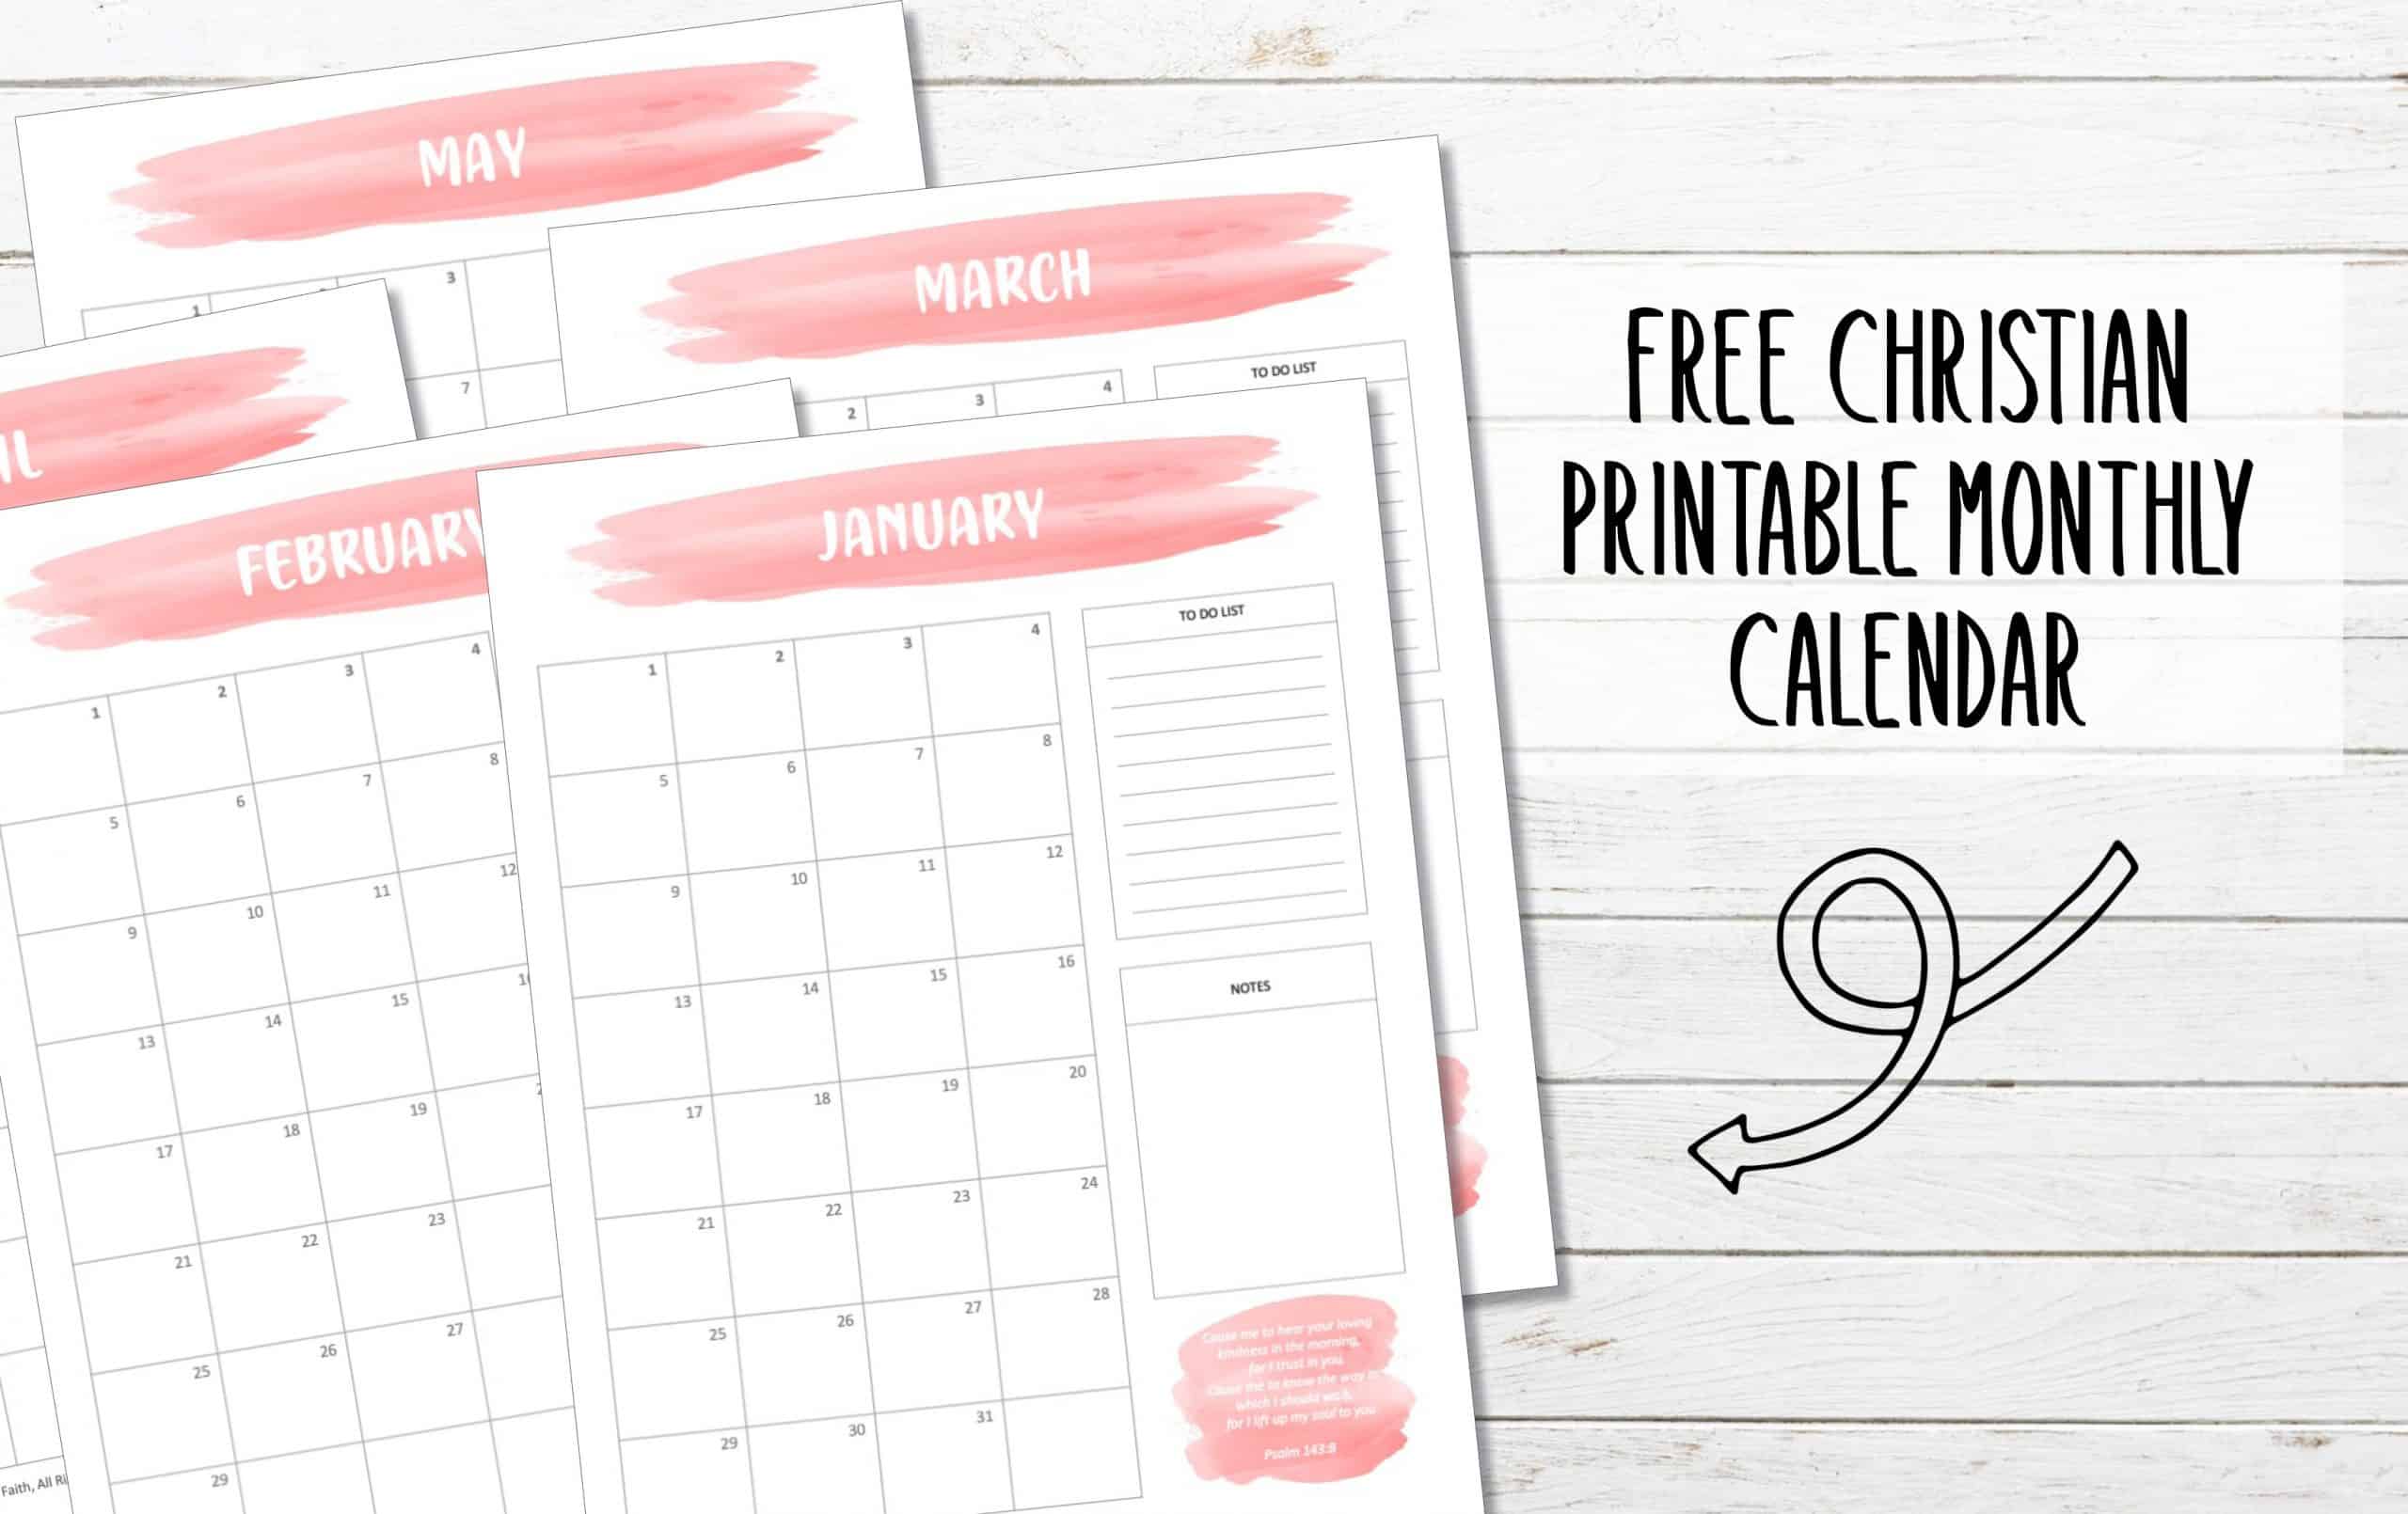 FREE Christian Printable Monthly Calendar (Vertical)